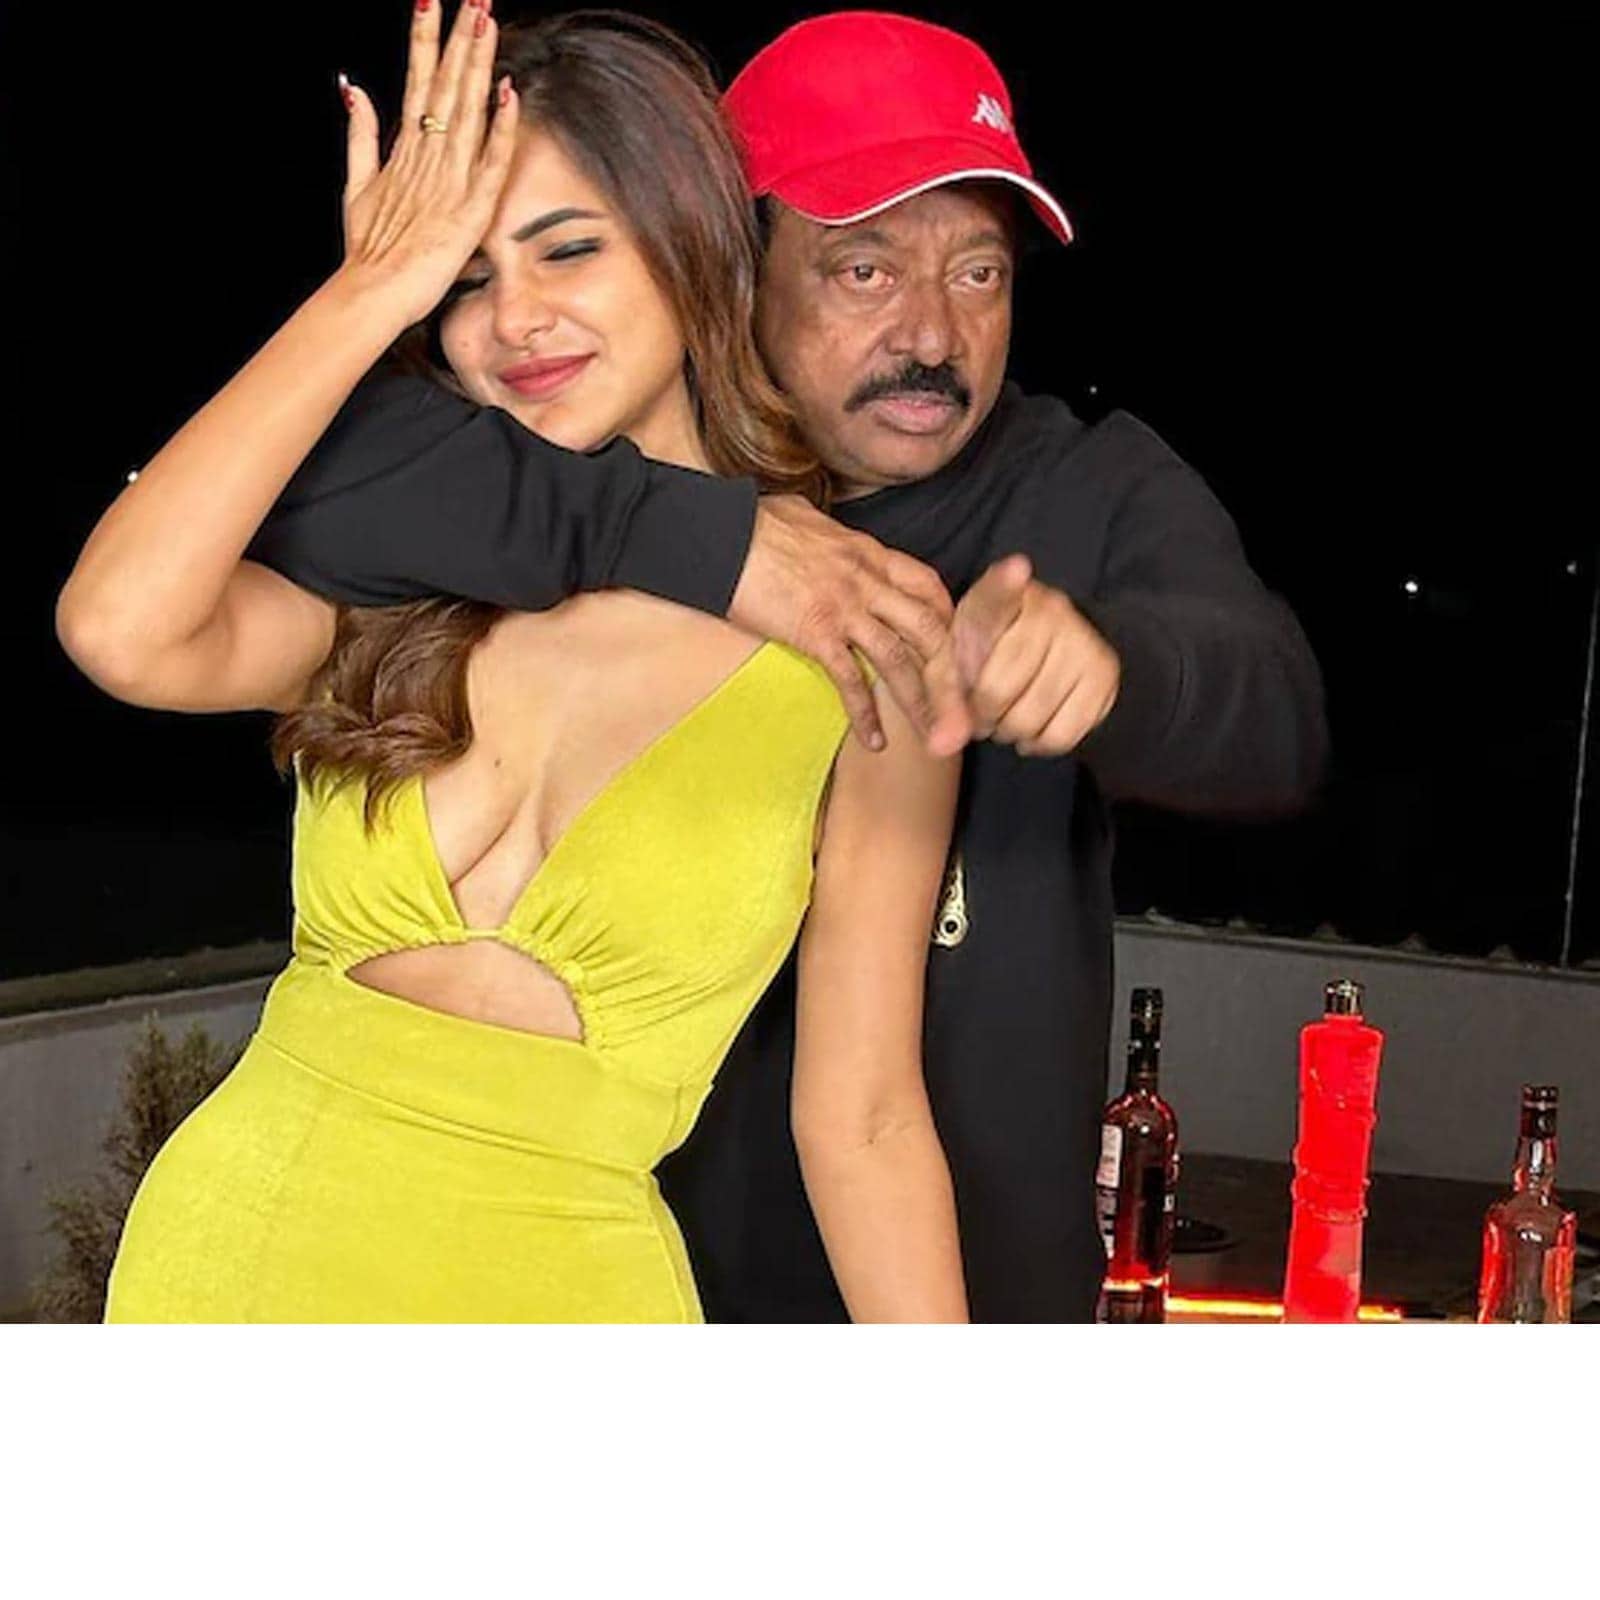 Sanny Lovan Xnxx 2019 - Who is Ashu Reddy? The Actress Seen With Ram Gopal Varma in 'Toe Licking'  Video - News18